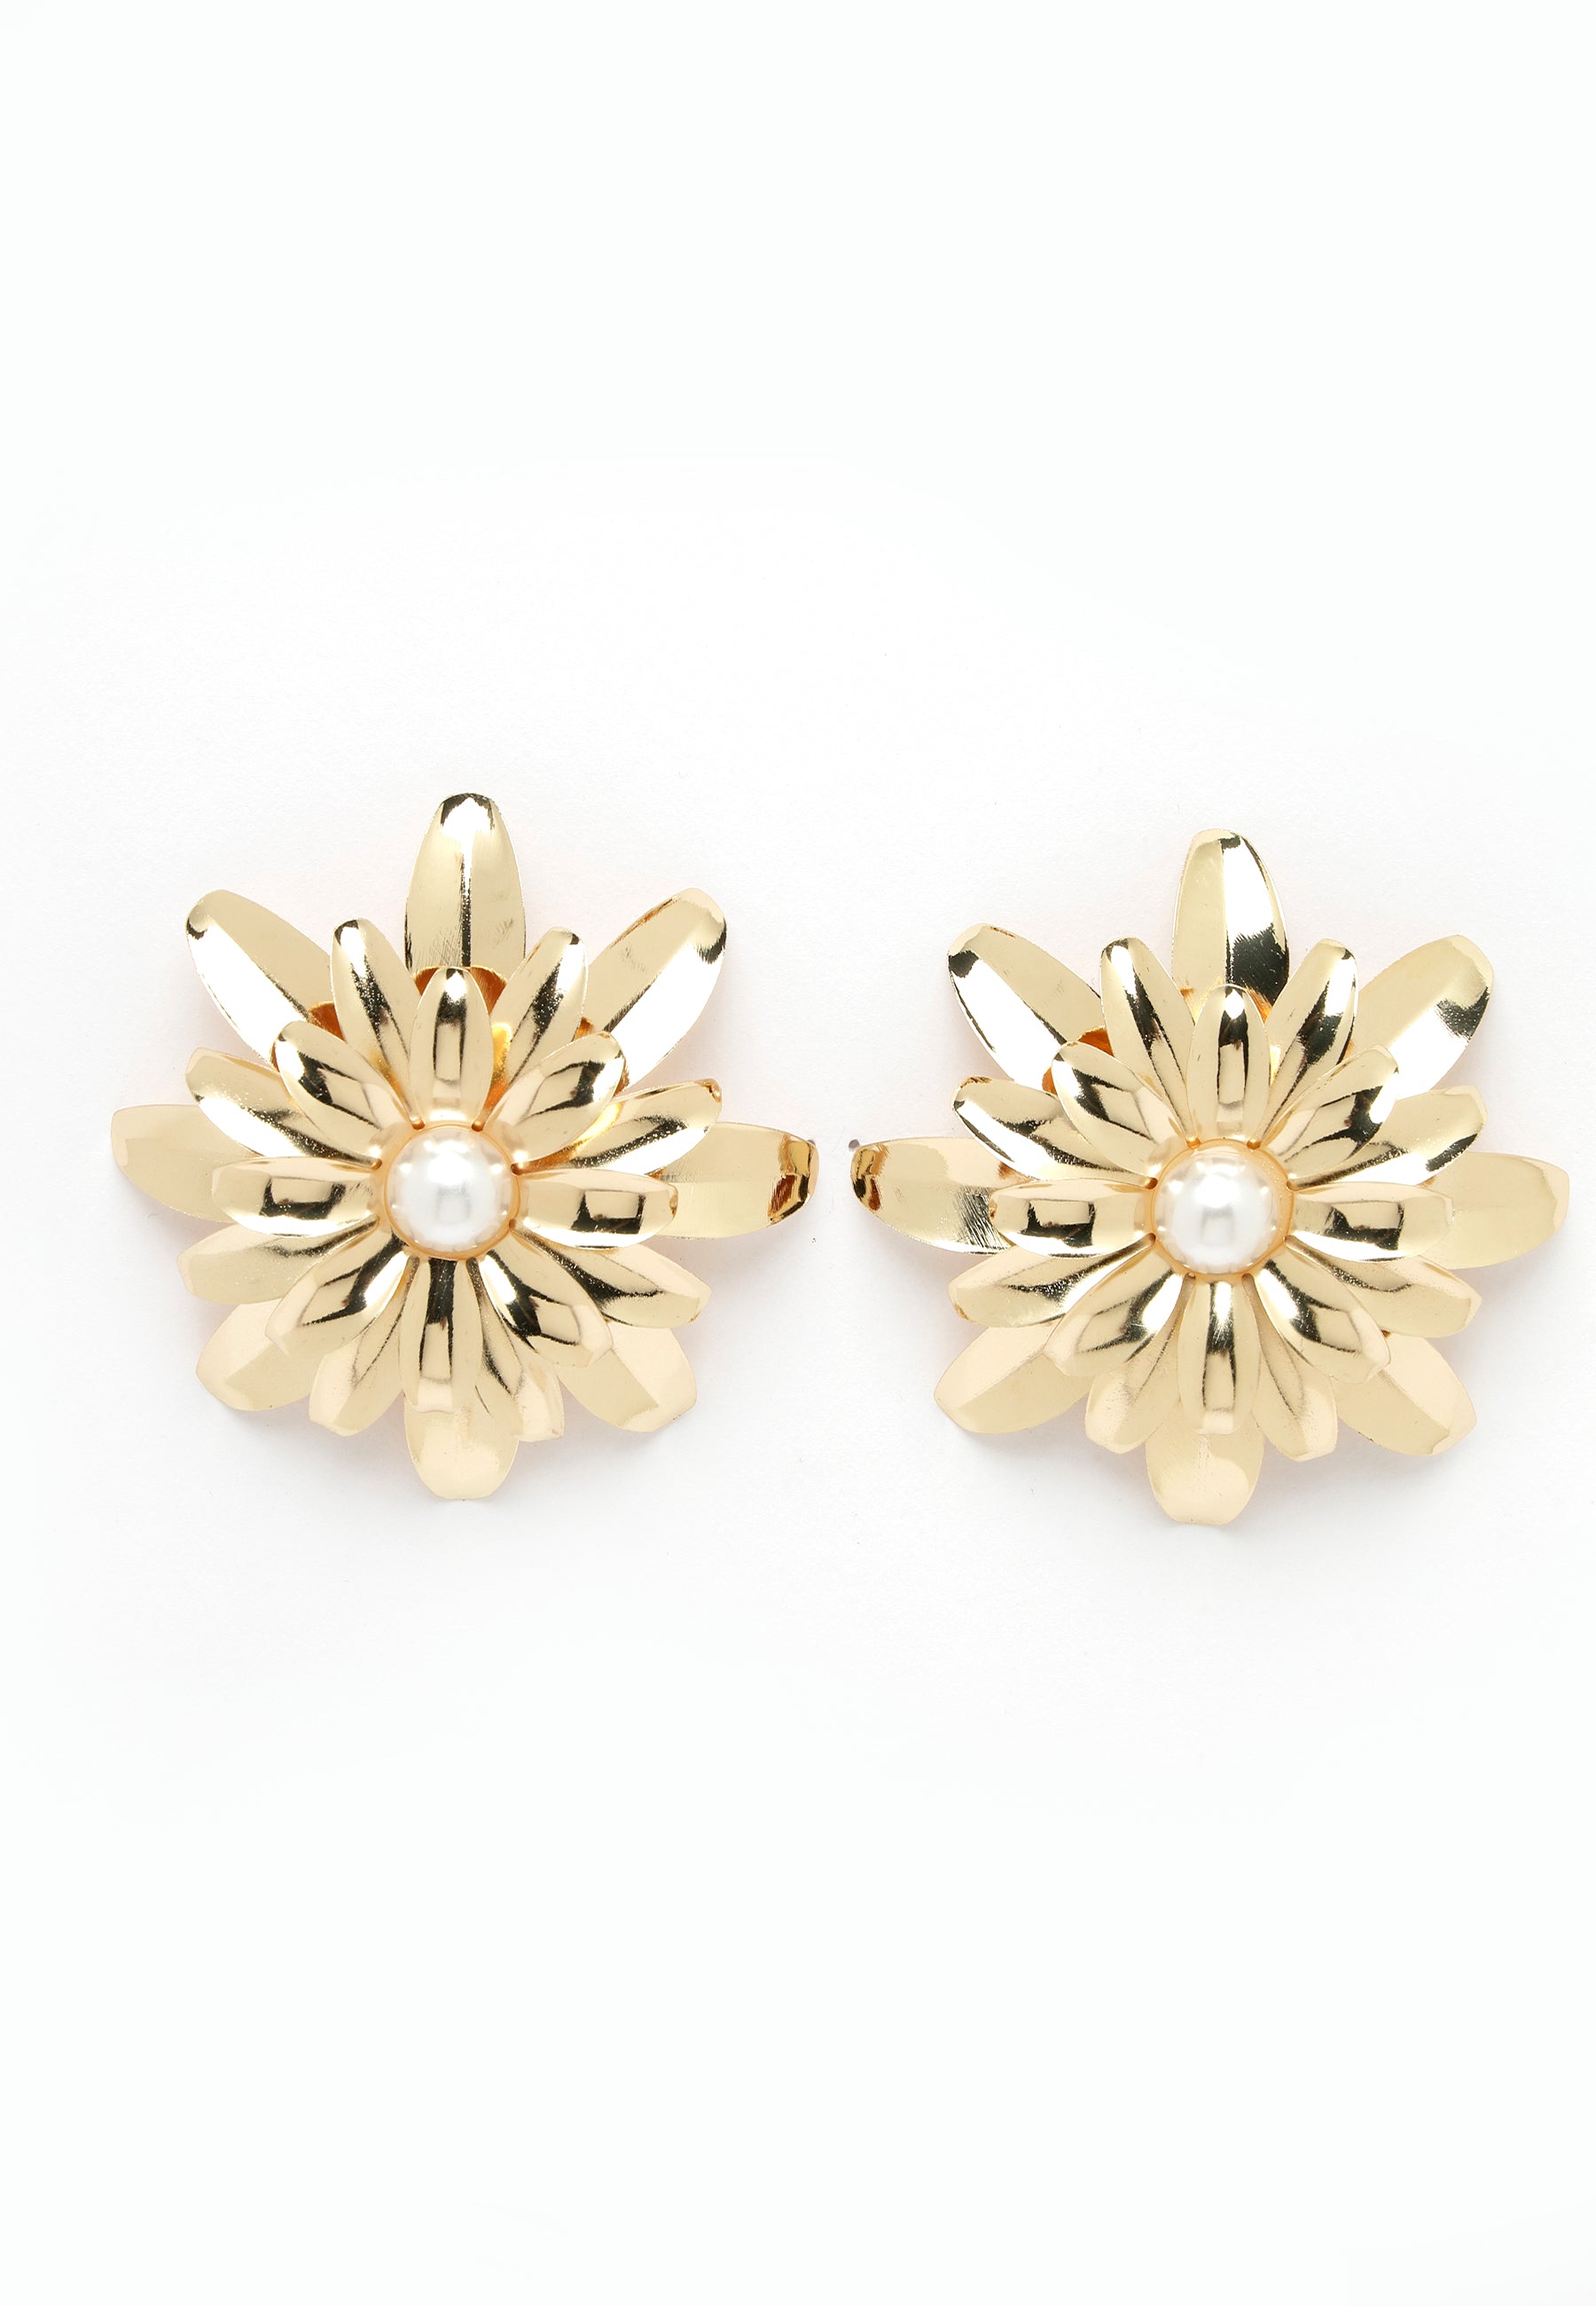 Avant-Garde Paris Gold-Colored Floral Stud Earrings